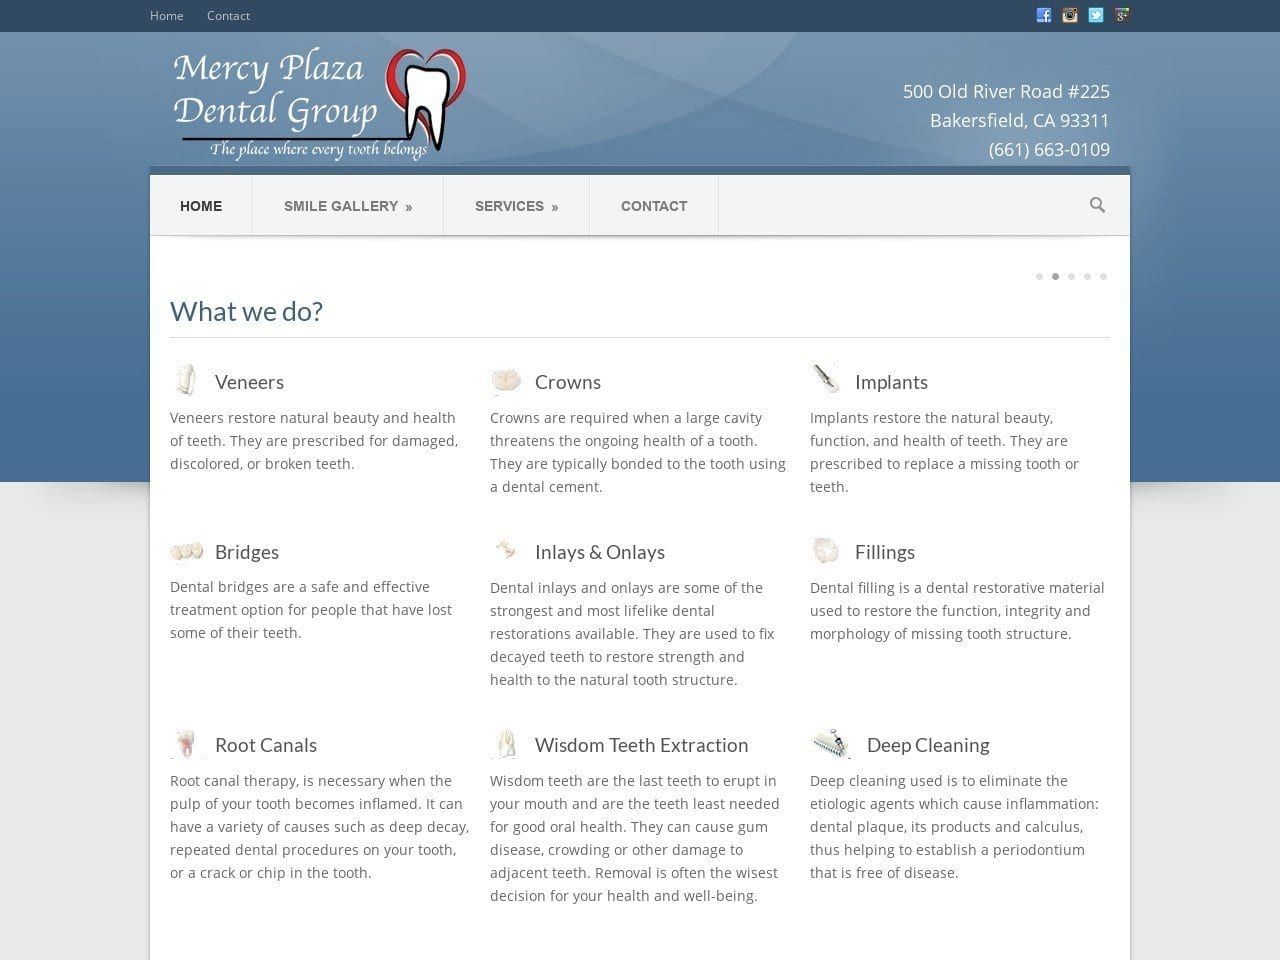 Mercy Plaza Dental Group Website Screenshot from mercyplazadentalgroup.com